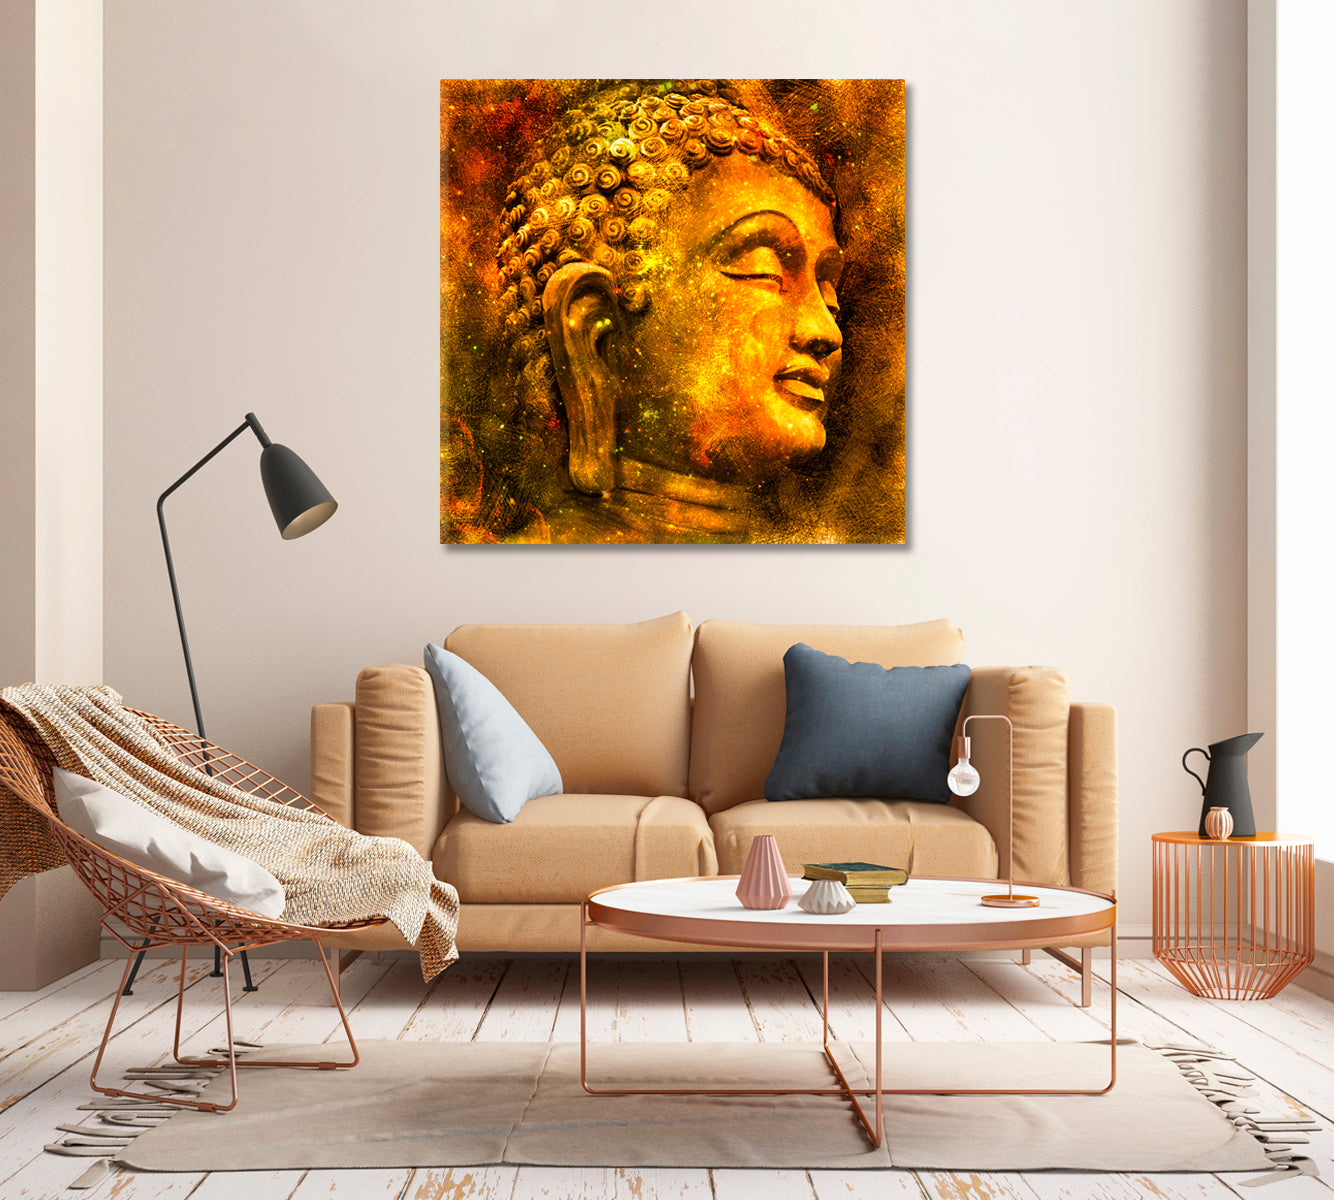 Head of Buddha Canvas Print-Canvas Print-CetArt-1 panel-12x12 inches-CetArt